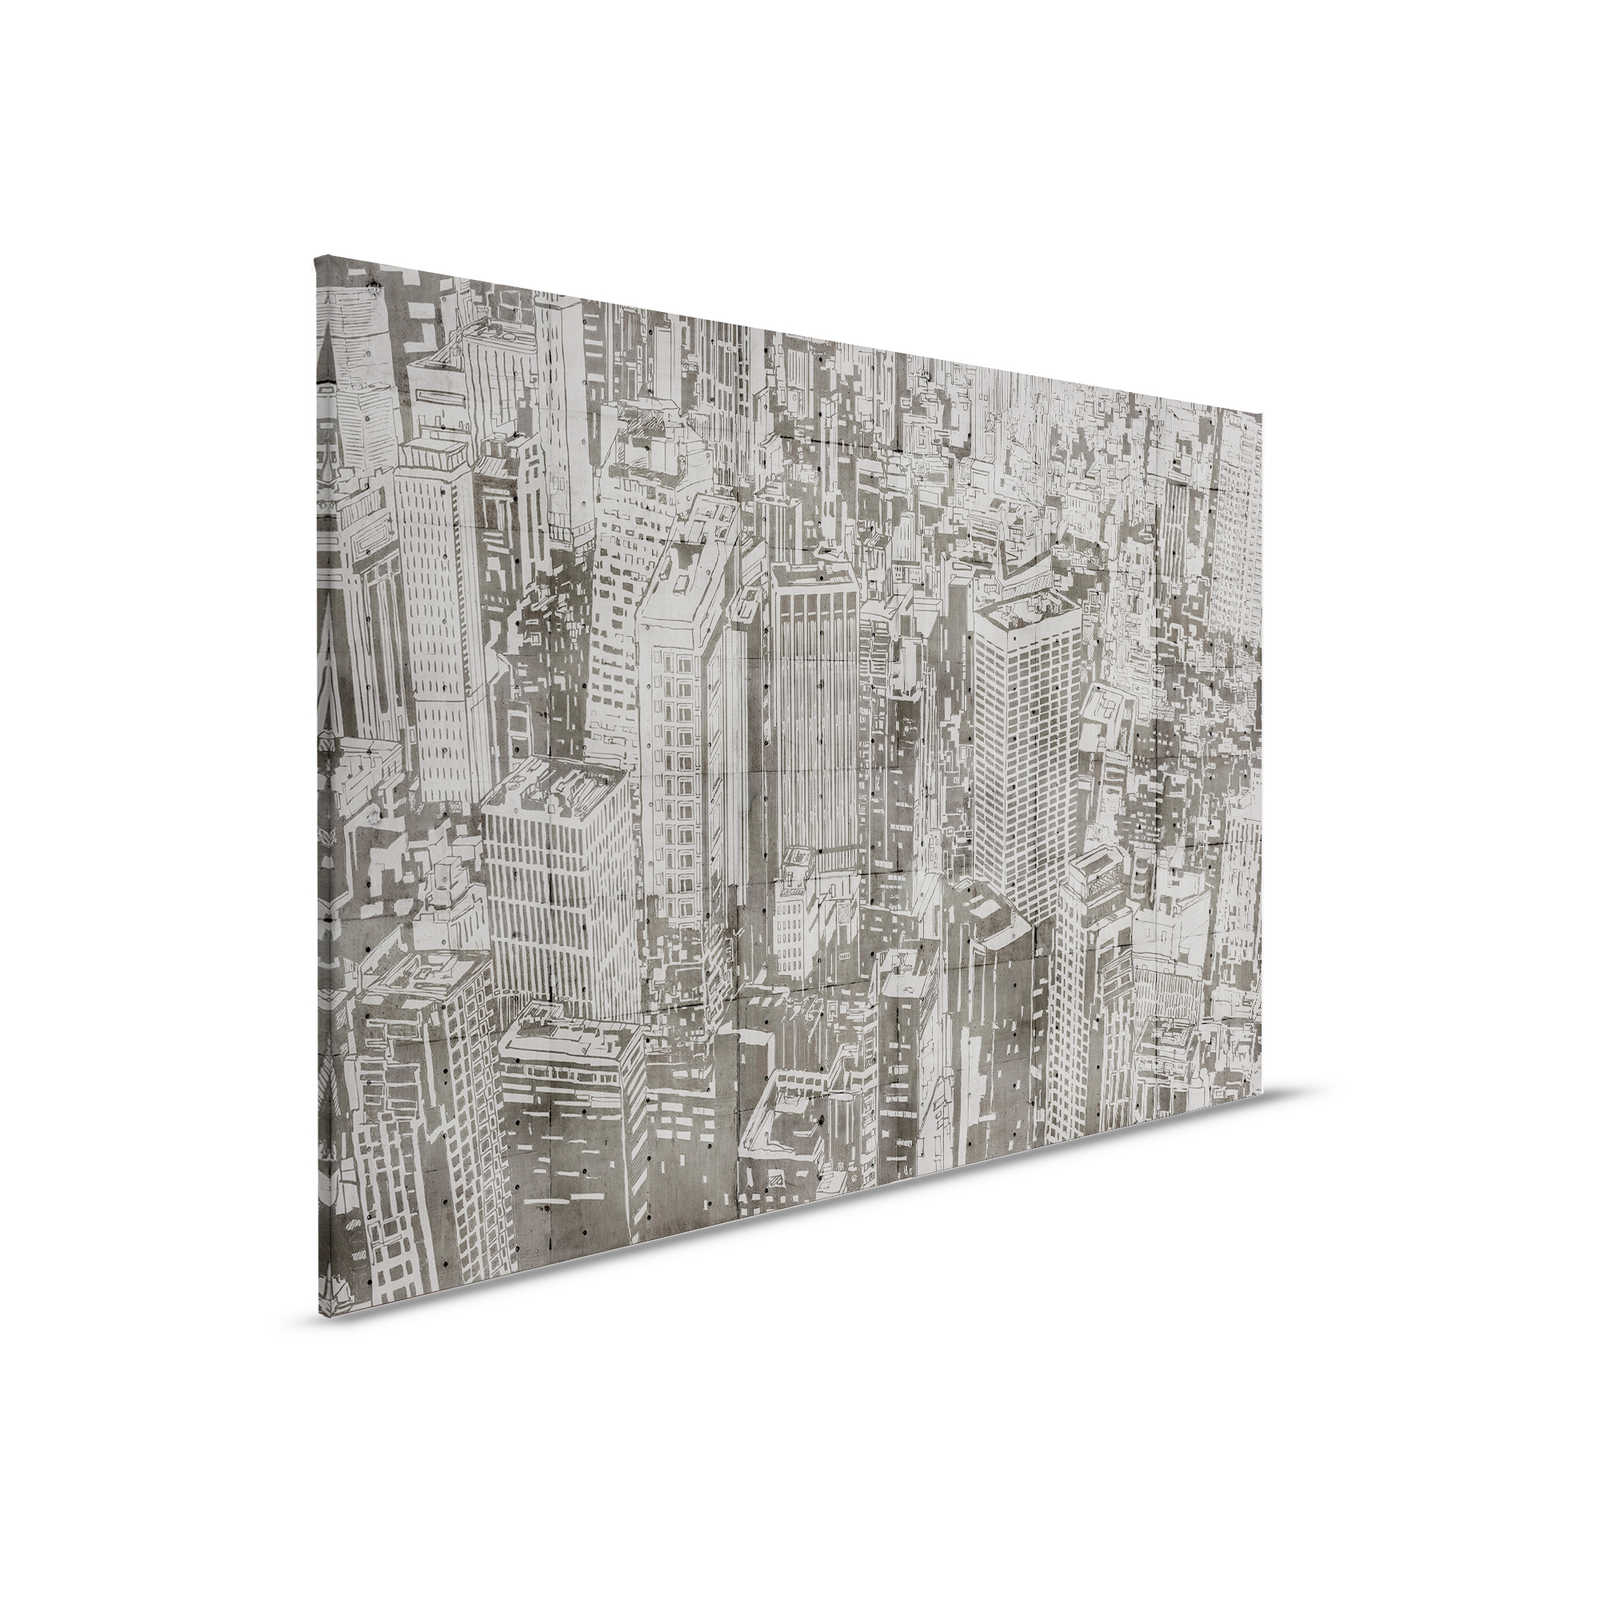 Downtown 2 - Betonnen structuur canvas schilderij New York look - 0.90 m x 0.60 m
